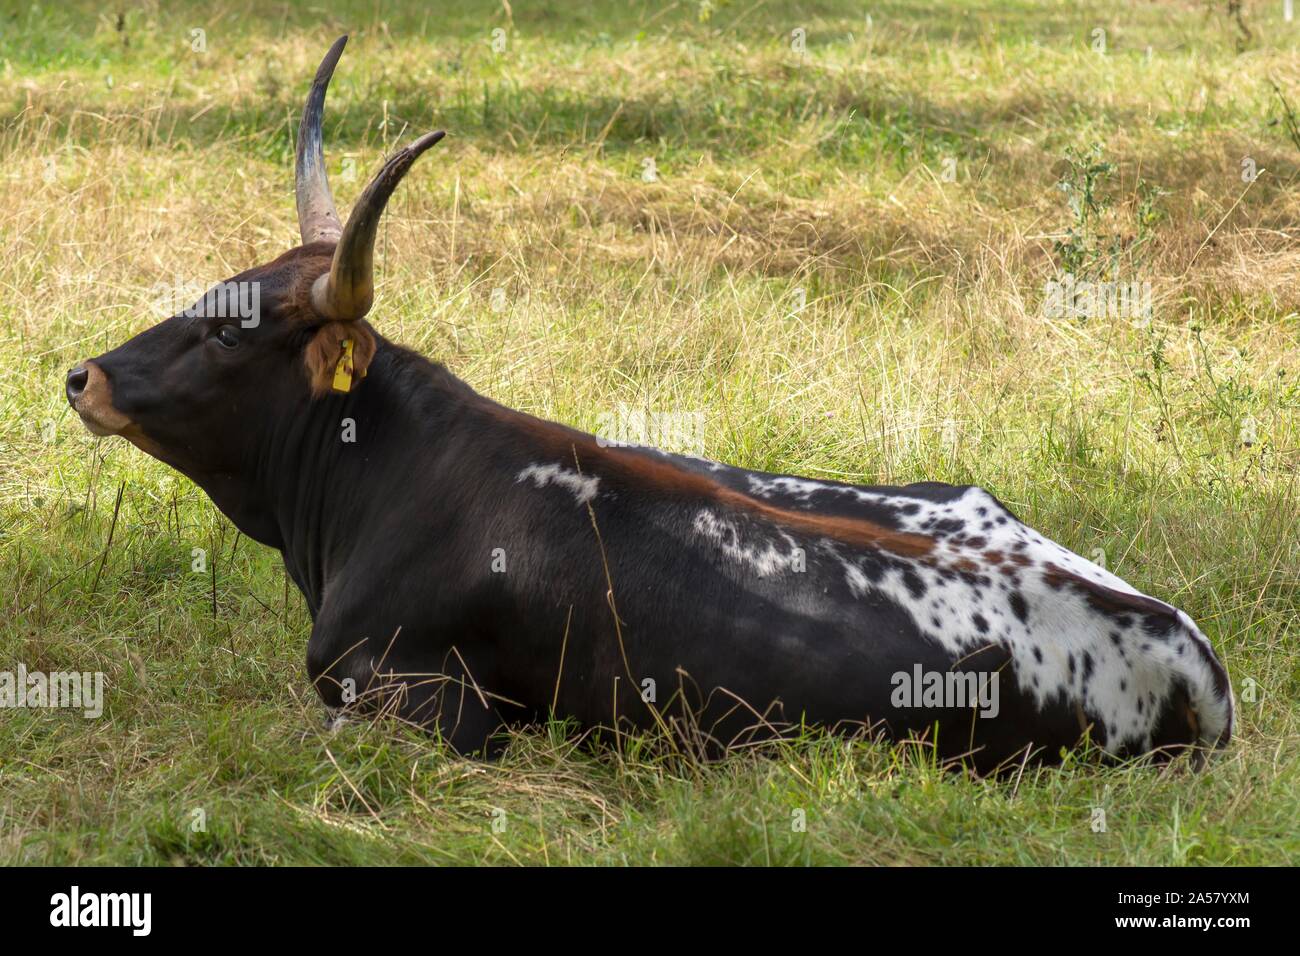 Texas Longhorn (Bos taurus), Bull giacente in erba, Baviera, Germania Foto Stock